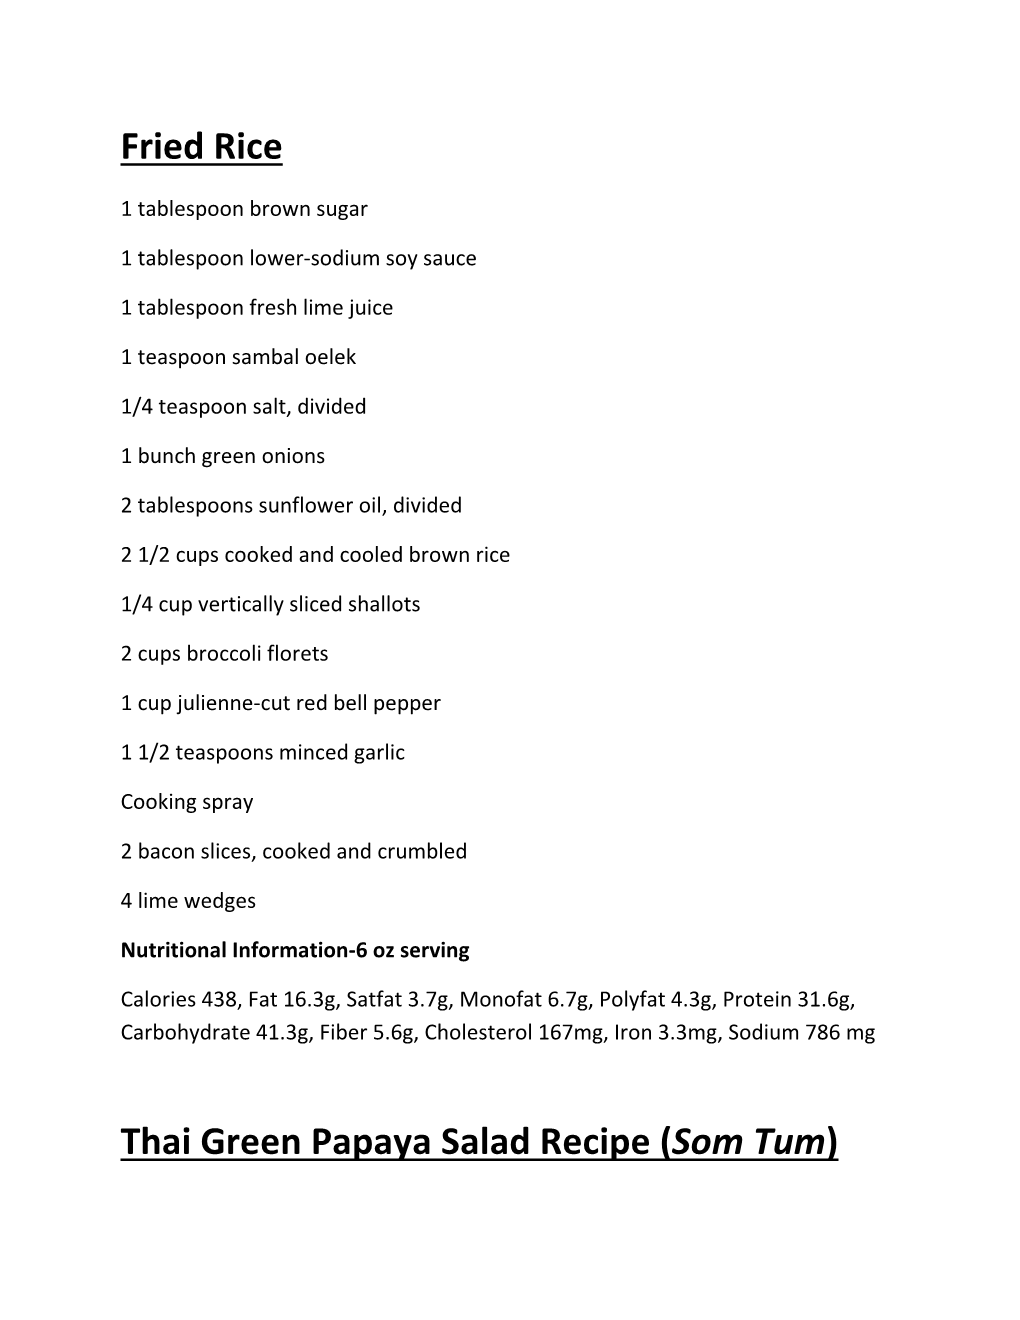 Fried Rice Thai Green Papaya Salad Recipe